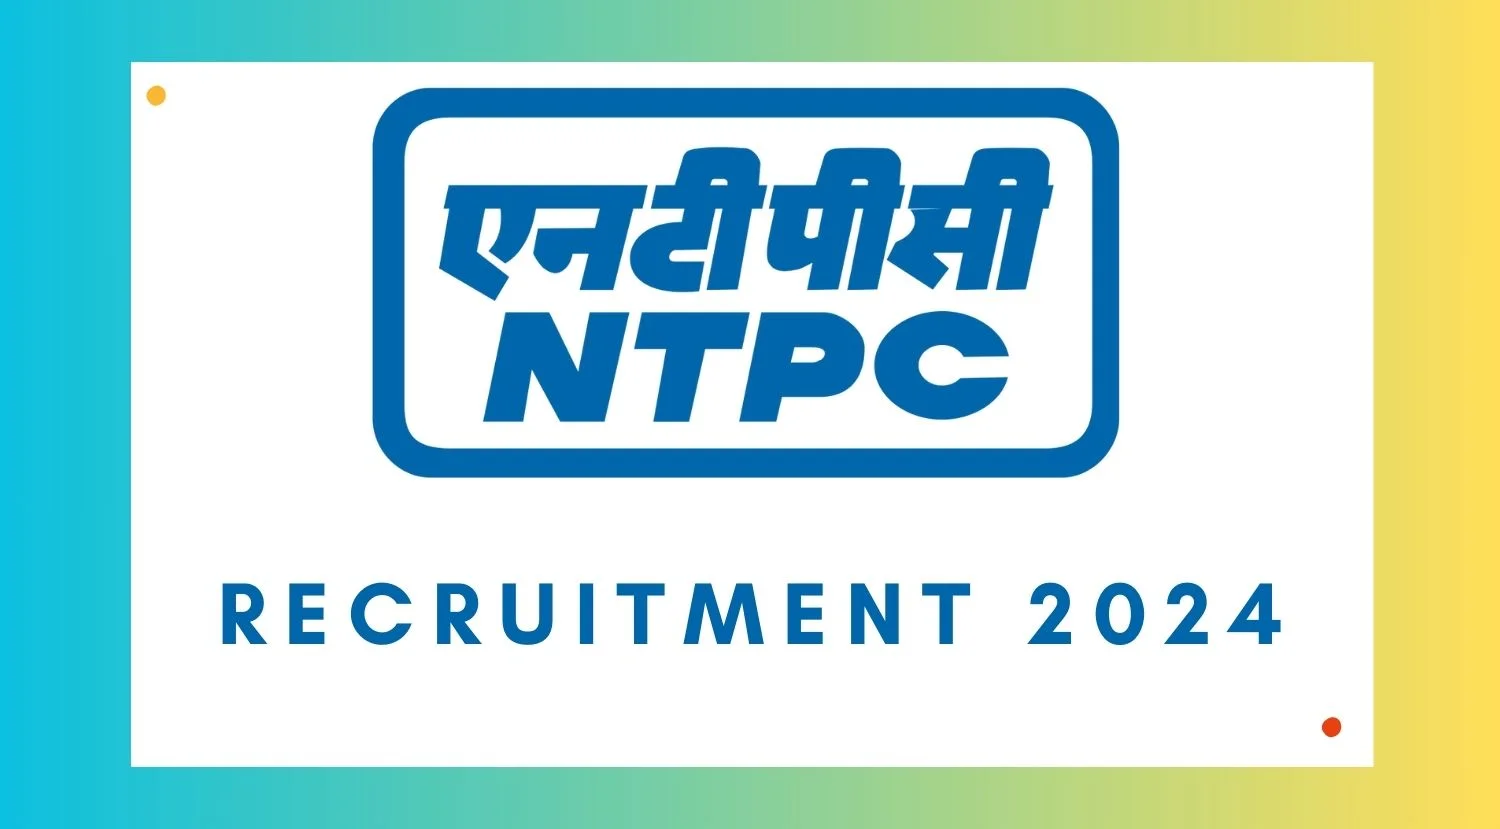 NTPC Executive Director Coal Mining Recruitment 2024